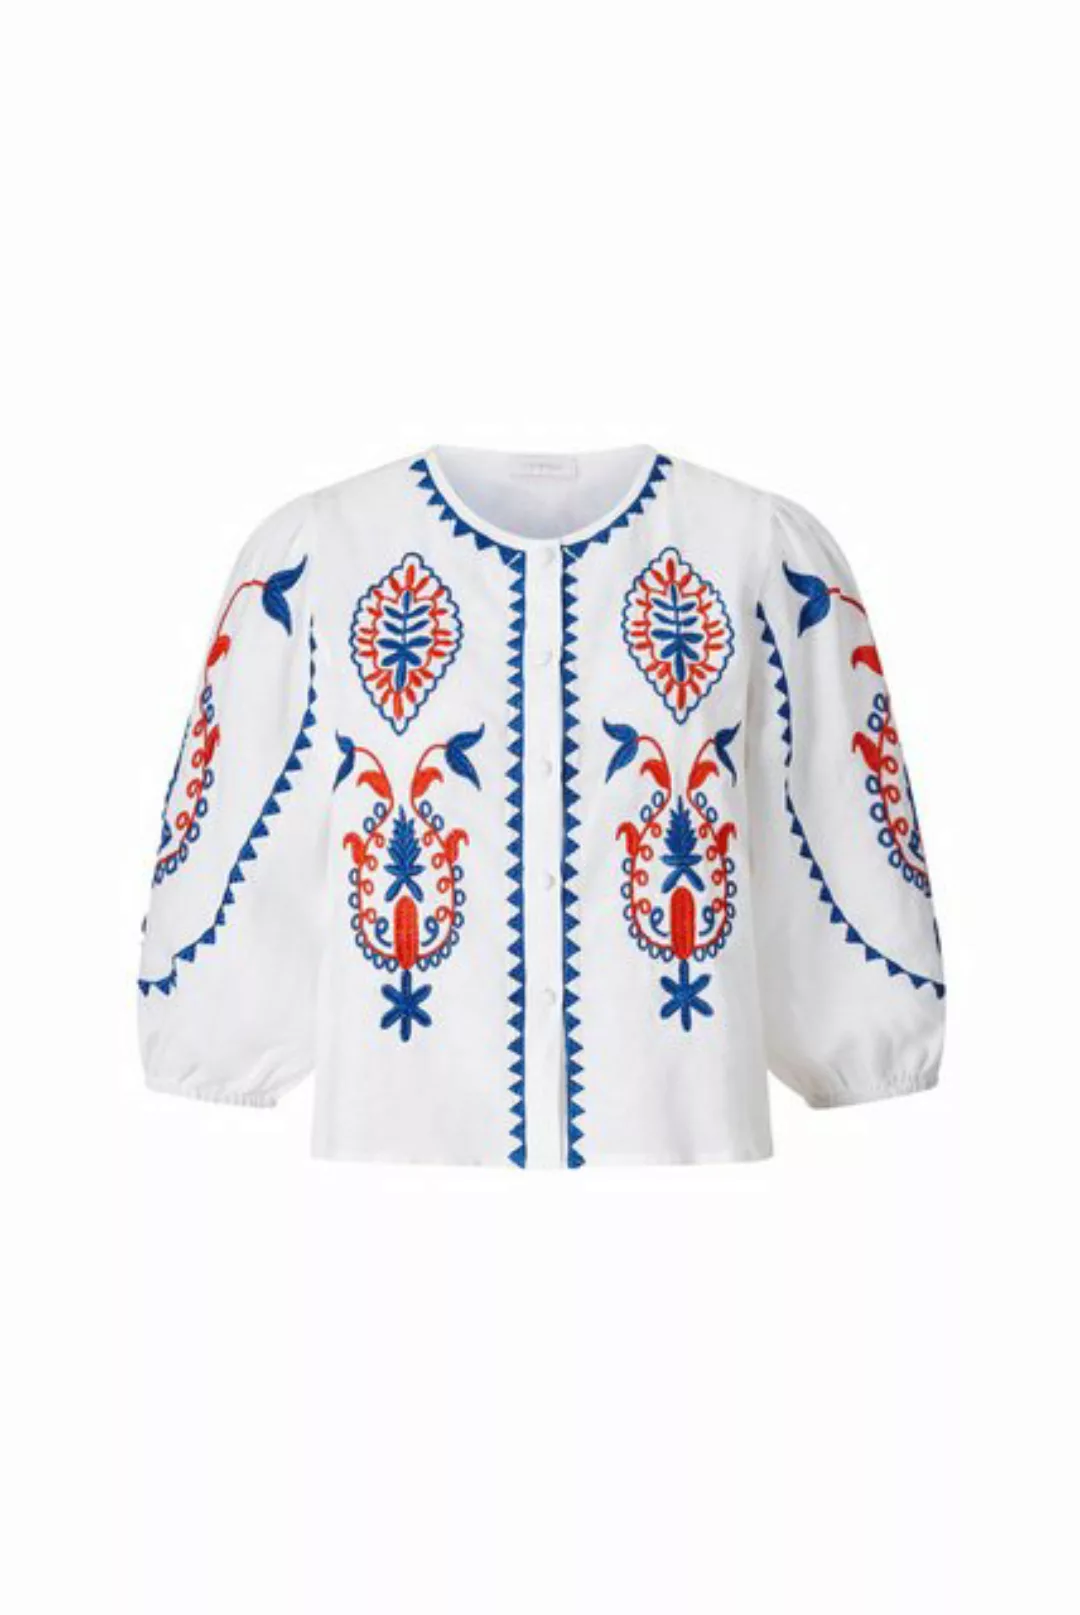 Rich & Royal Blusenshirt embroidery blouse günstig online kaufen